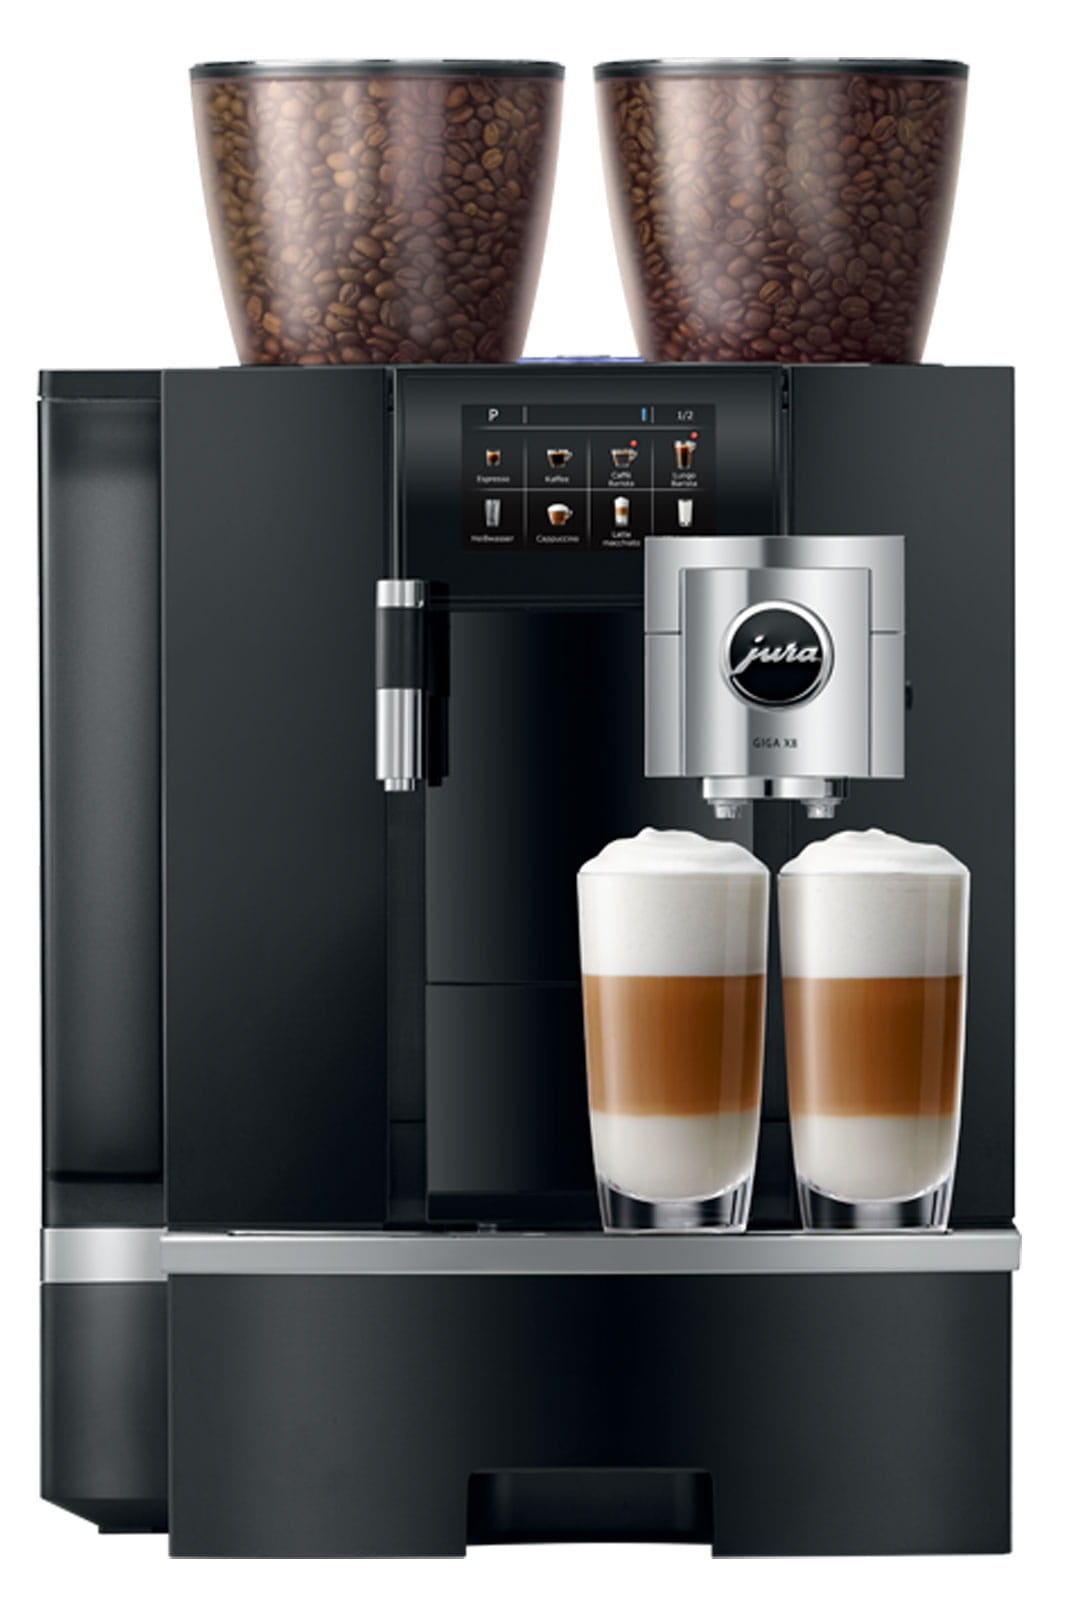 Jura GIGA X8 Aluminum Black professional super-automatic espresso machine